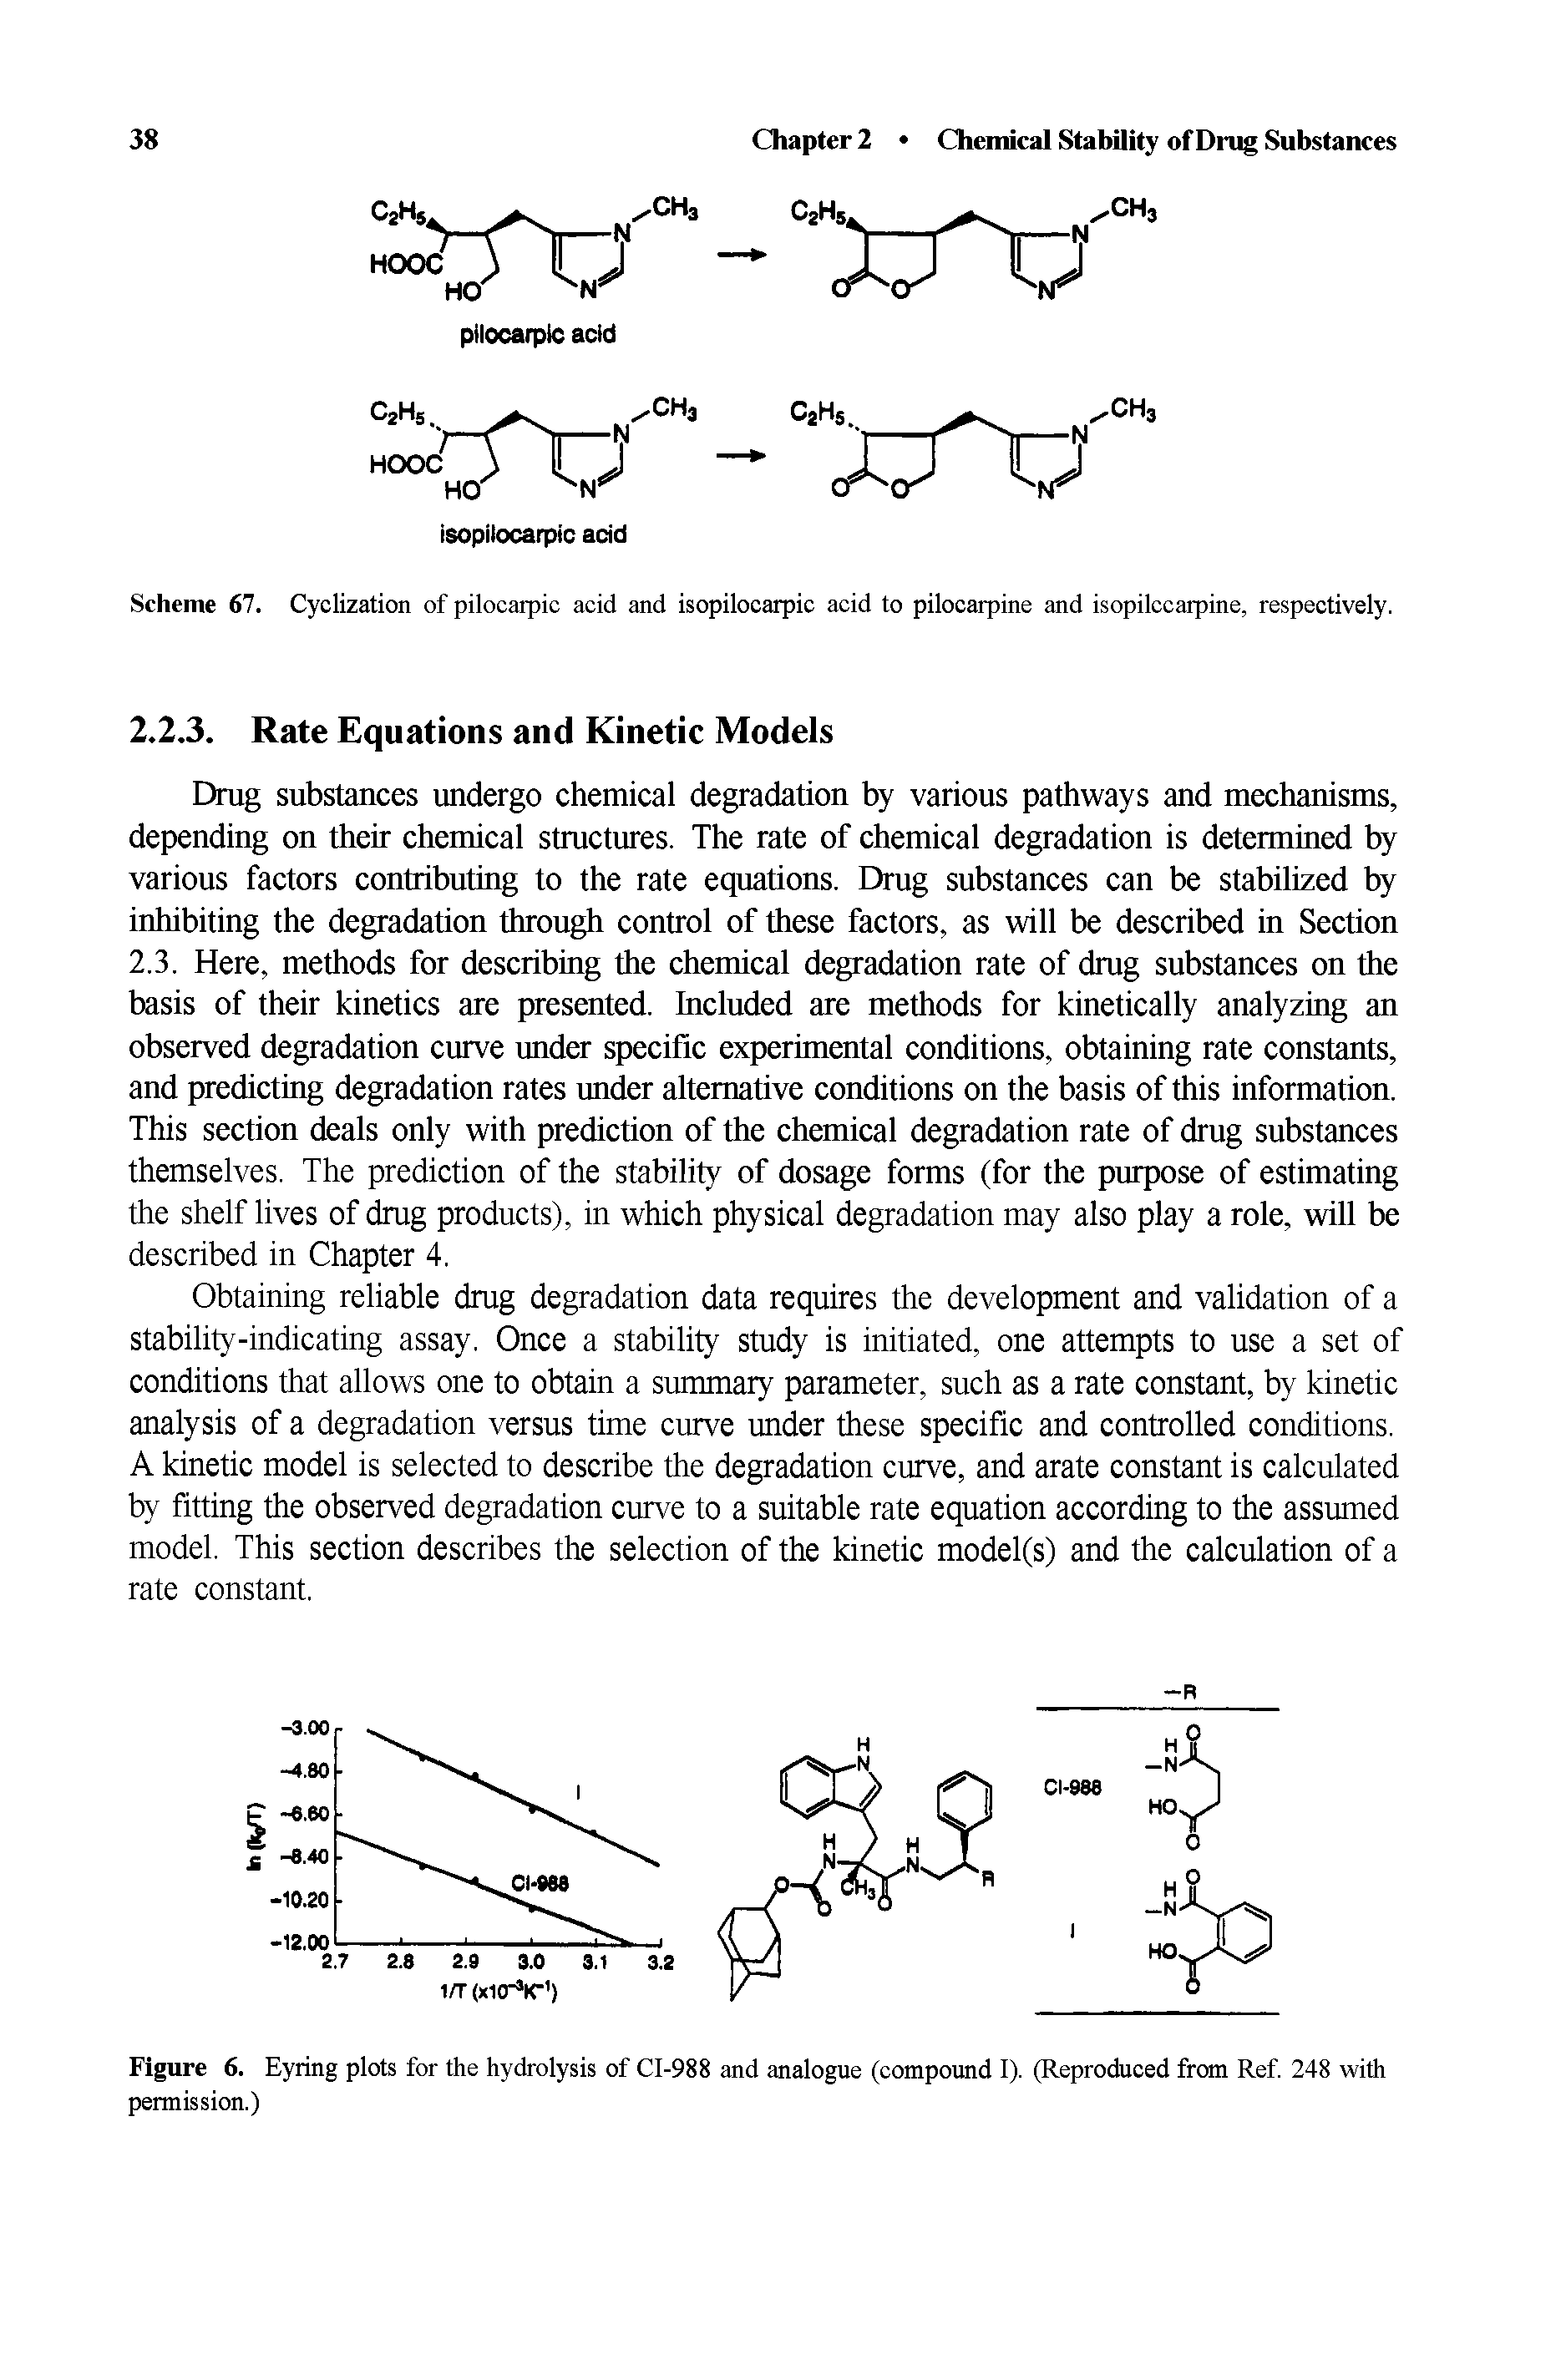 Scheme 67. Cyclization of pilocarpic acid and isopilocarpic acid to pilocarpine and isopilccarpine, respectively.